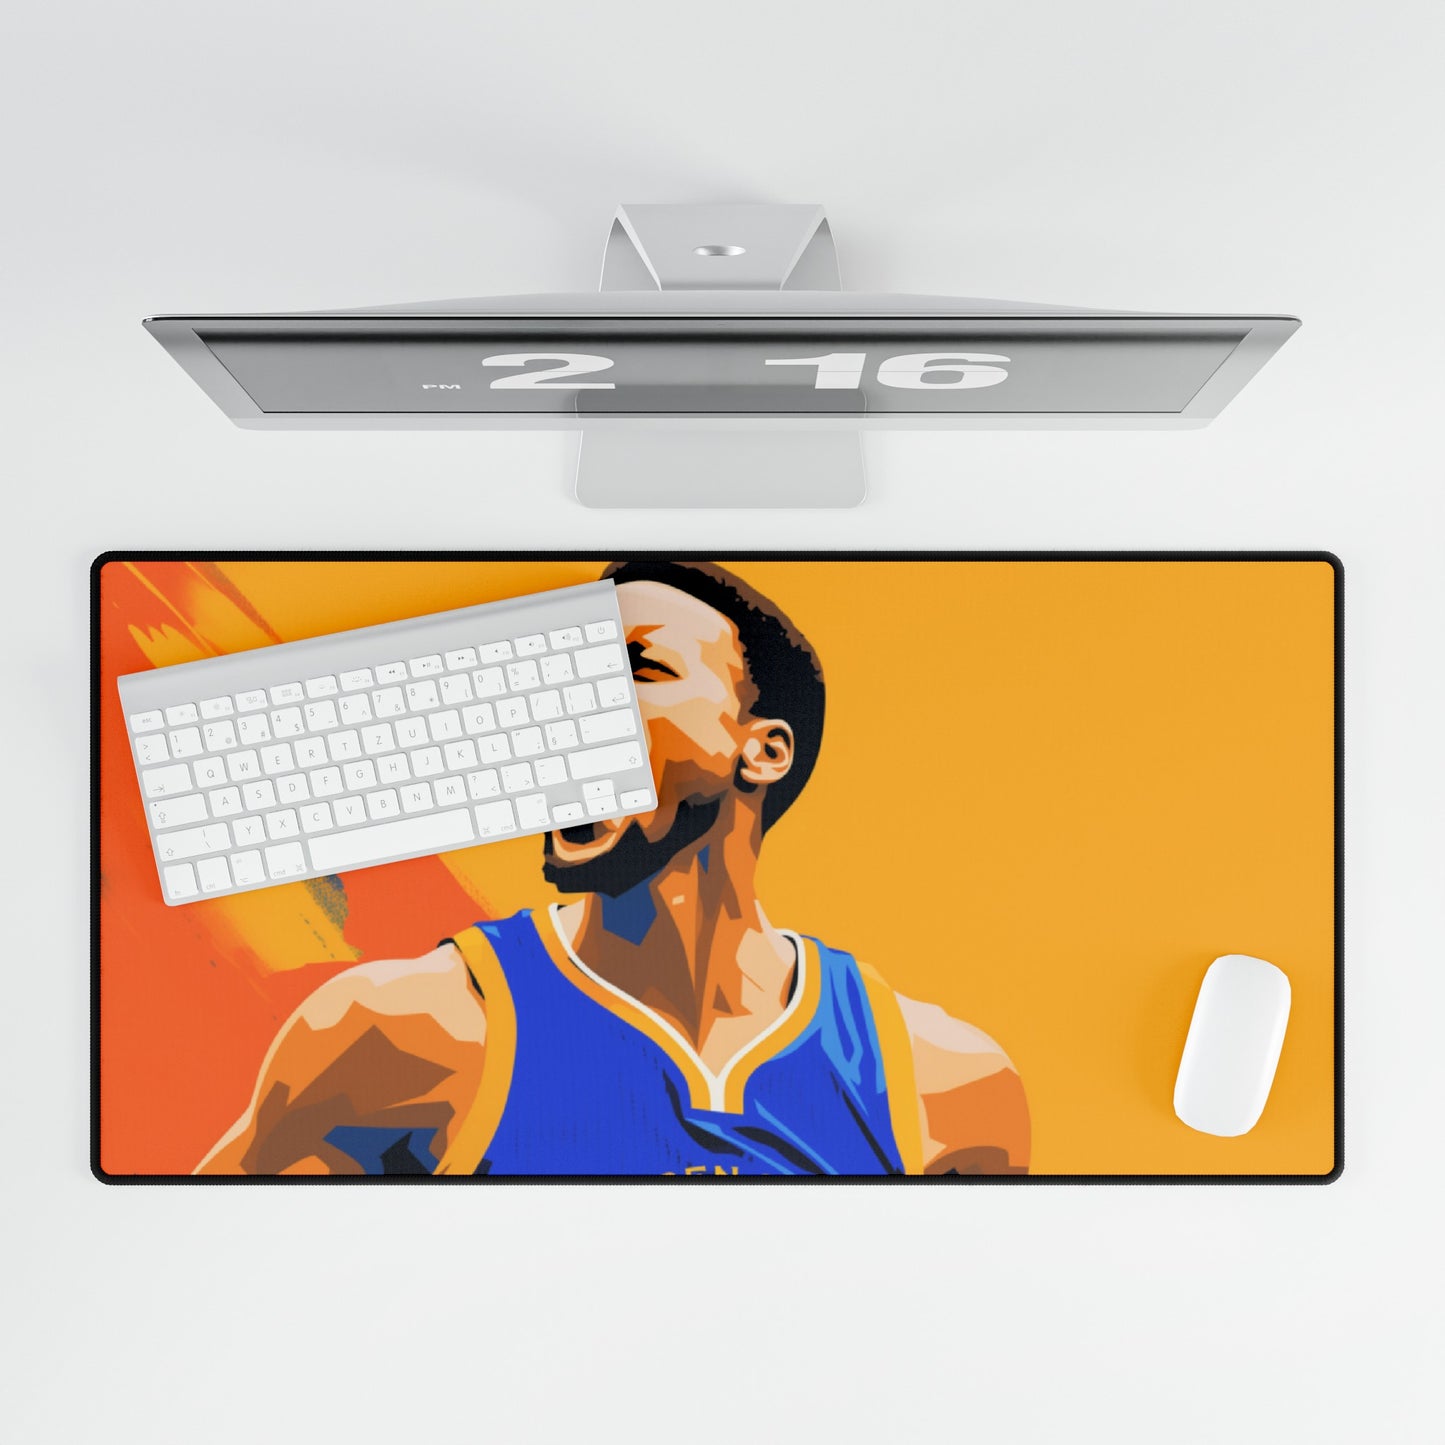 Steph Curry Golden State Warriors High Definition Desk Mat Curry Mousepad